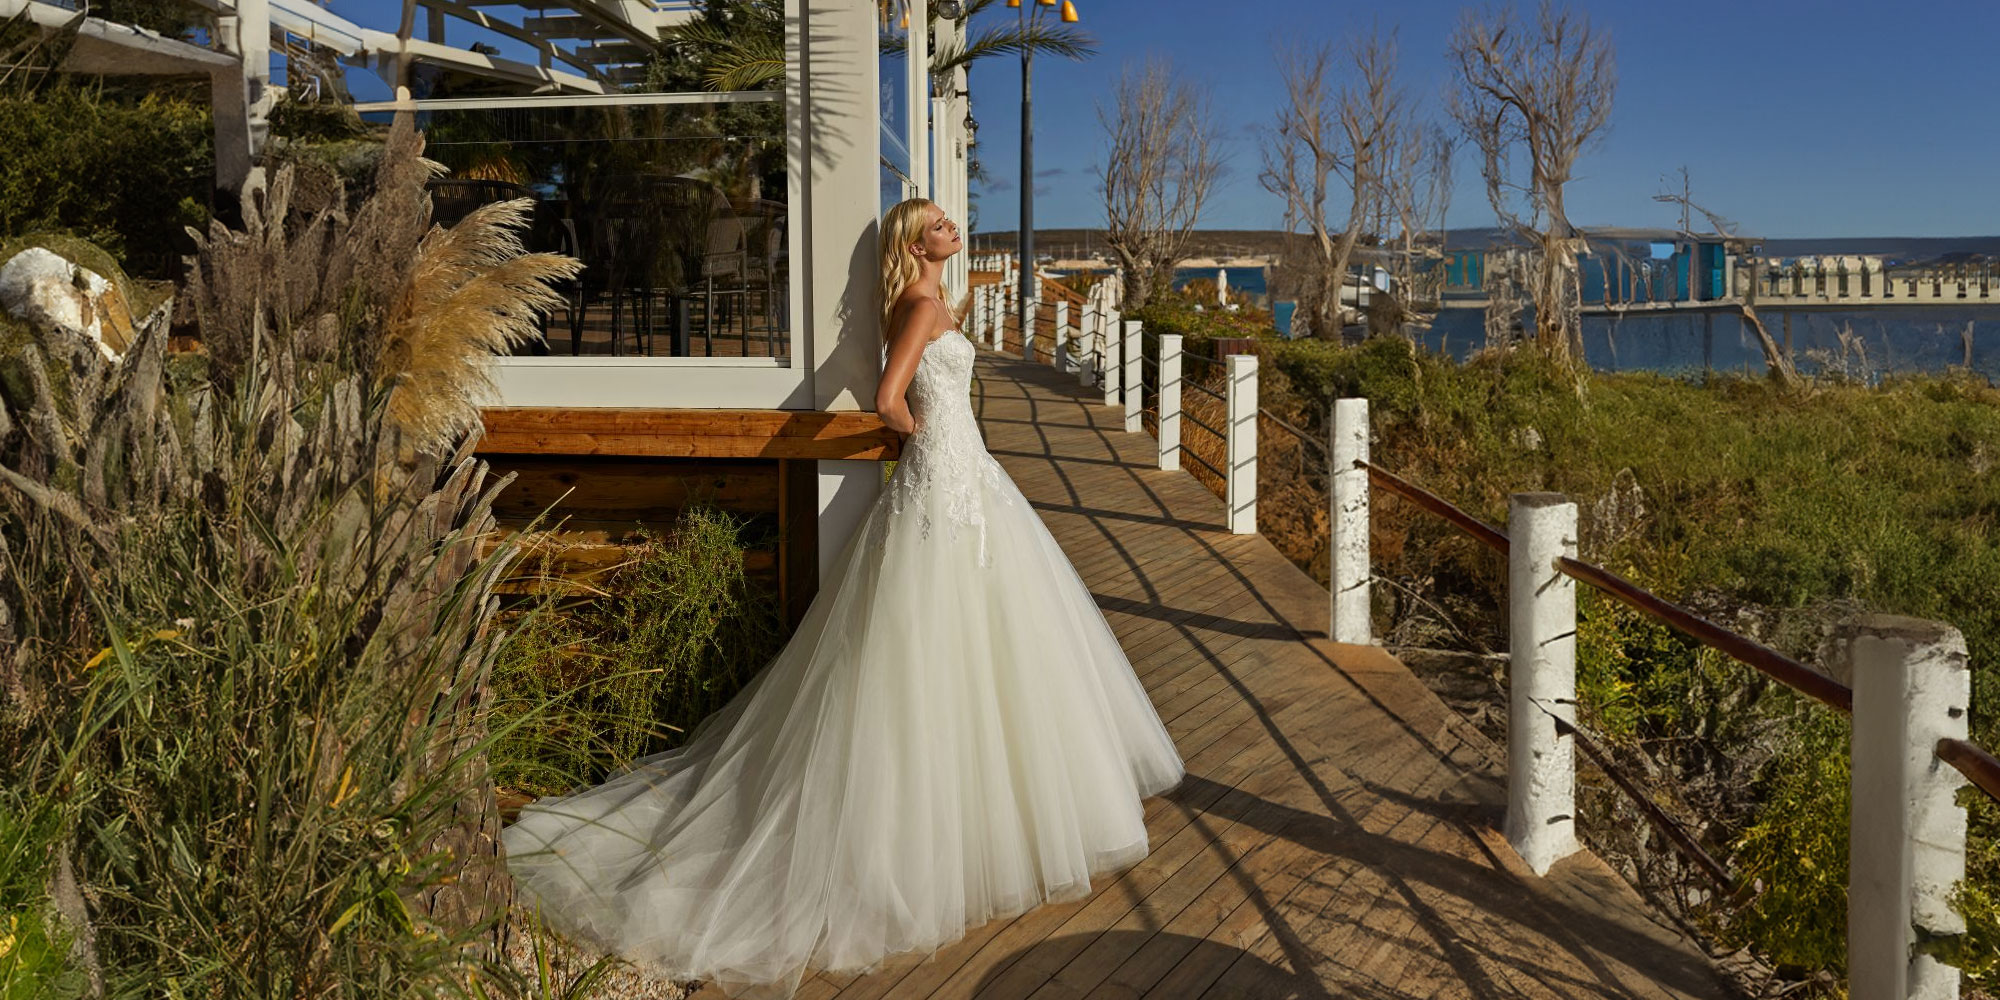 Explore the charm of off-the-shoulder wedding dresses-Mont Elisa